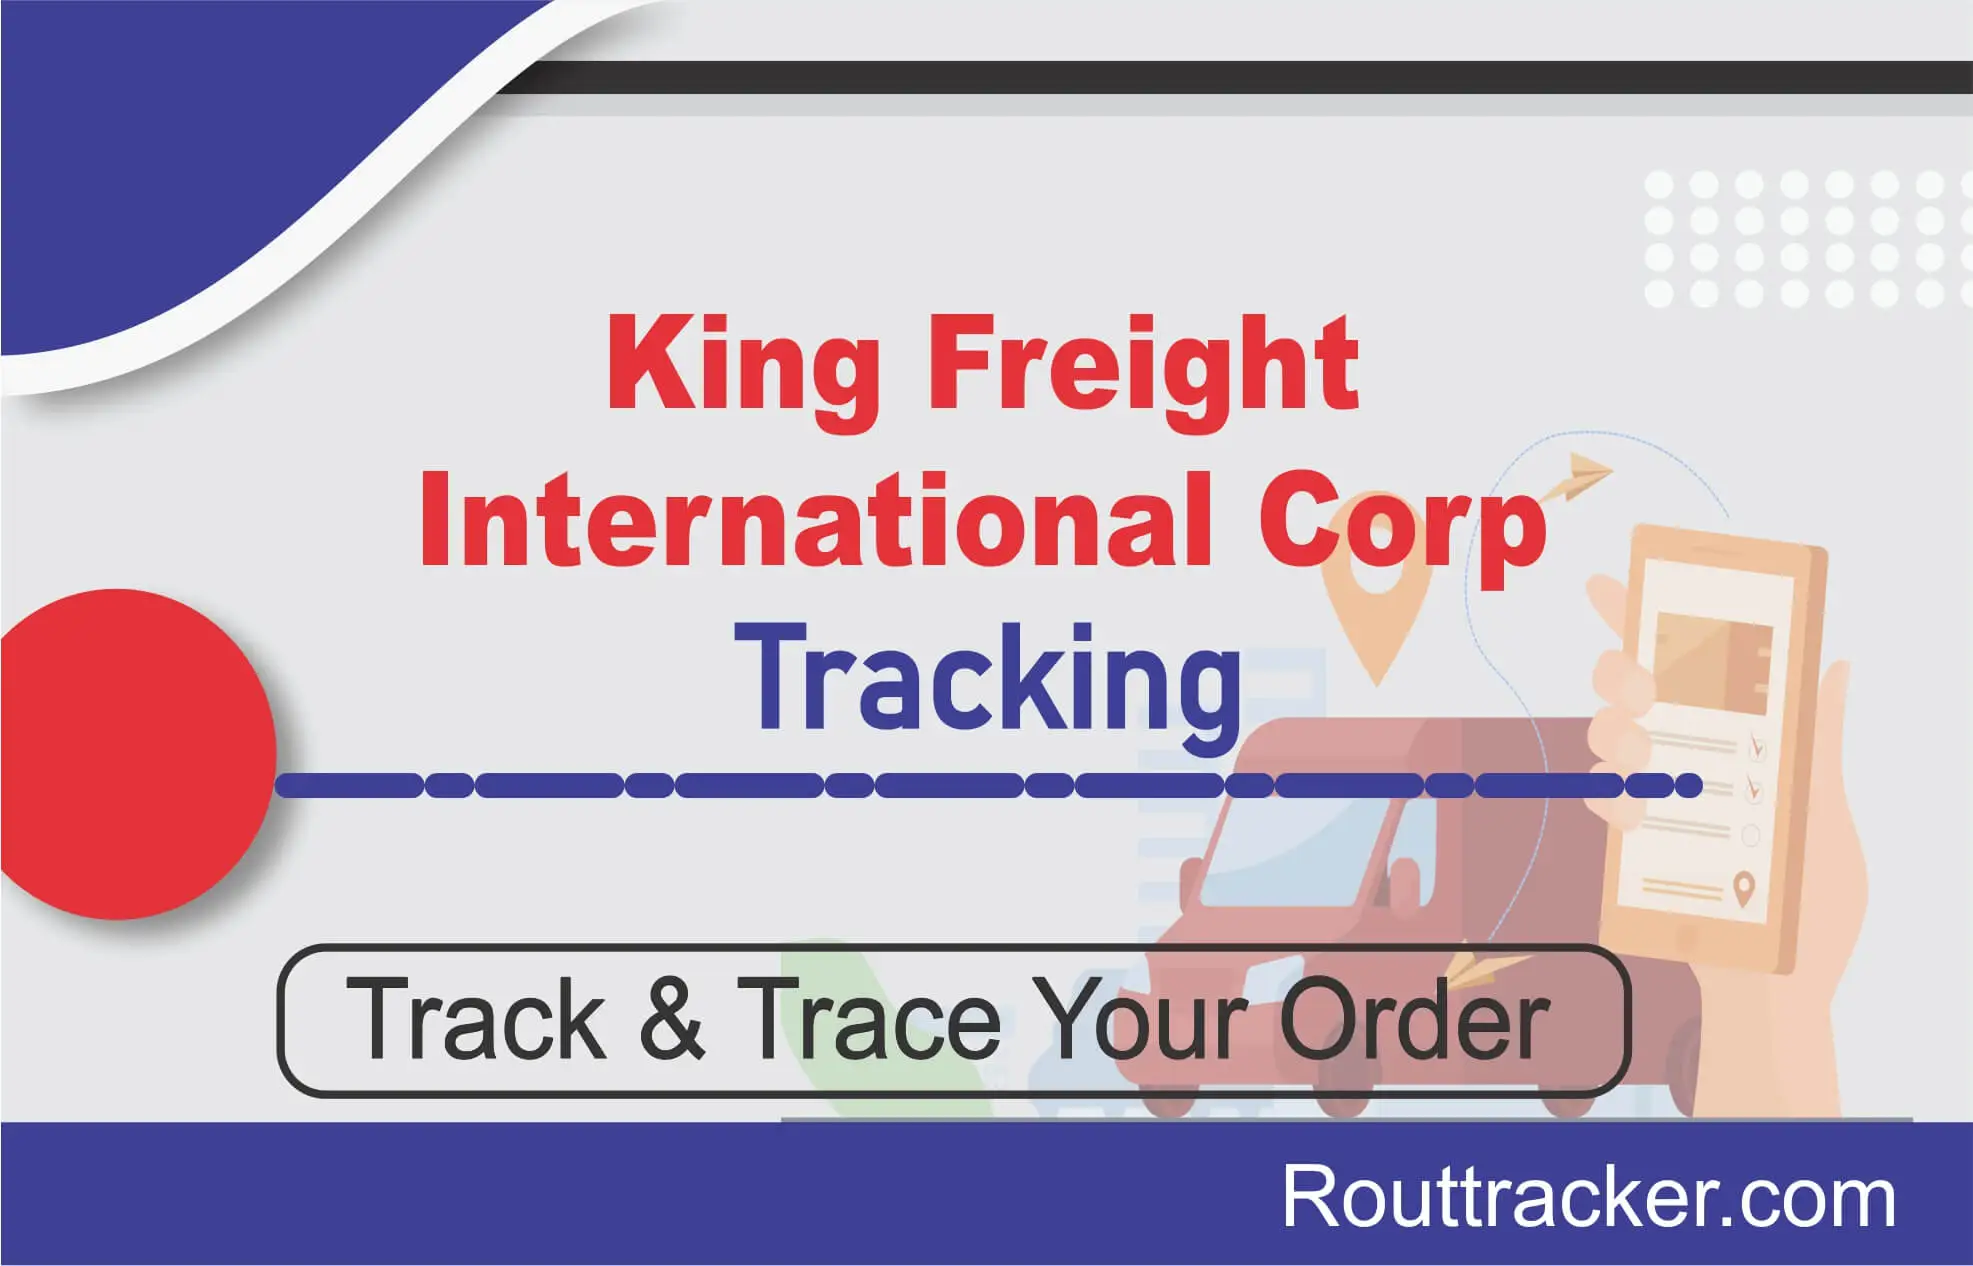 King Freight International Corp Tracking